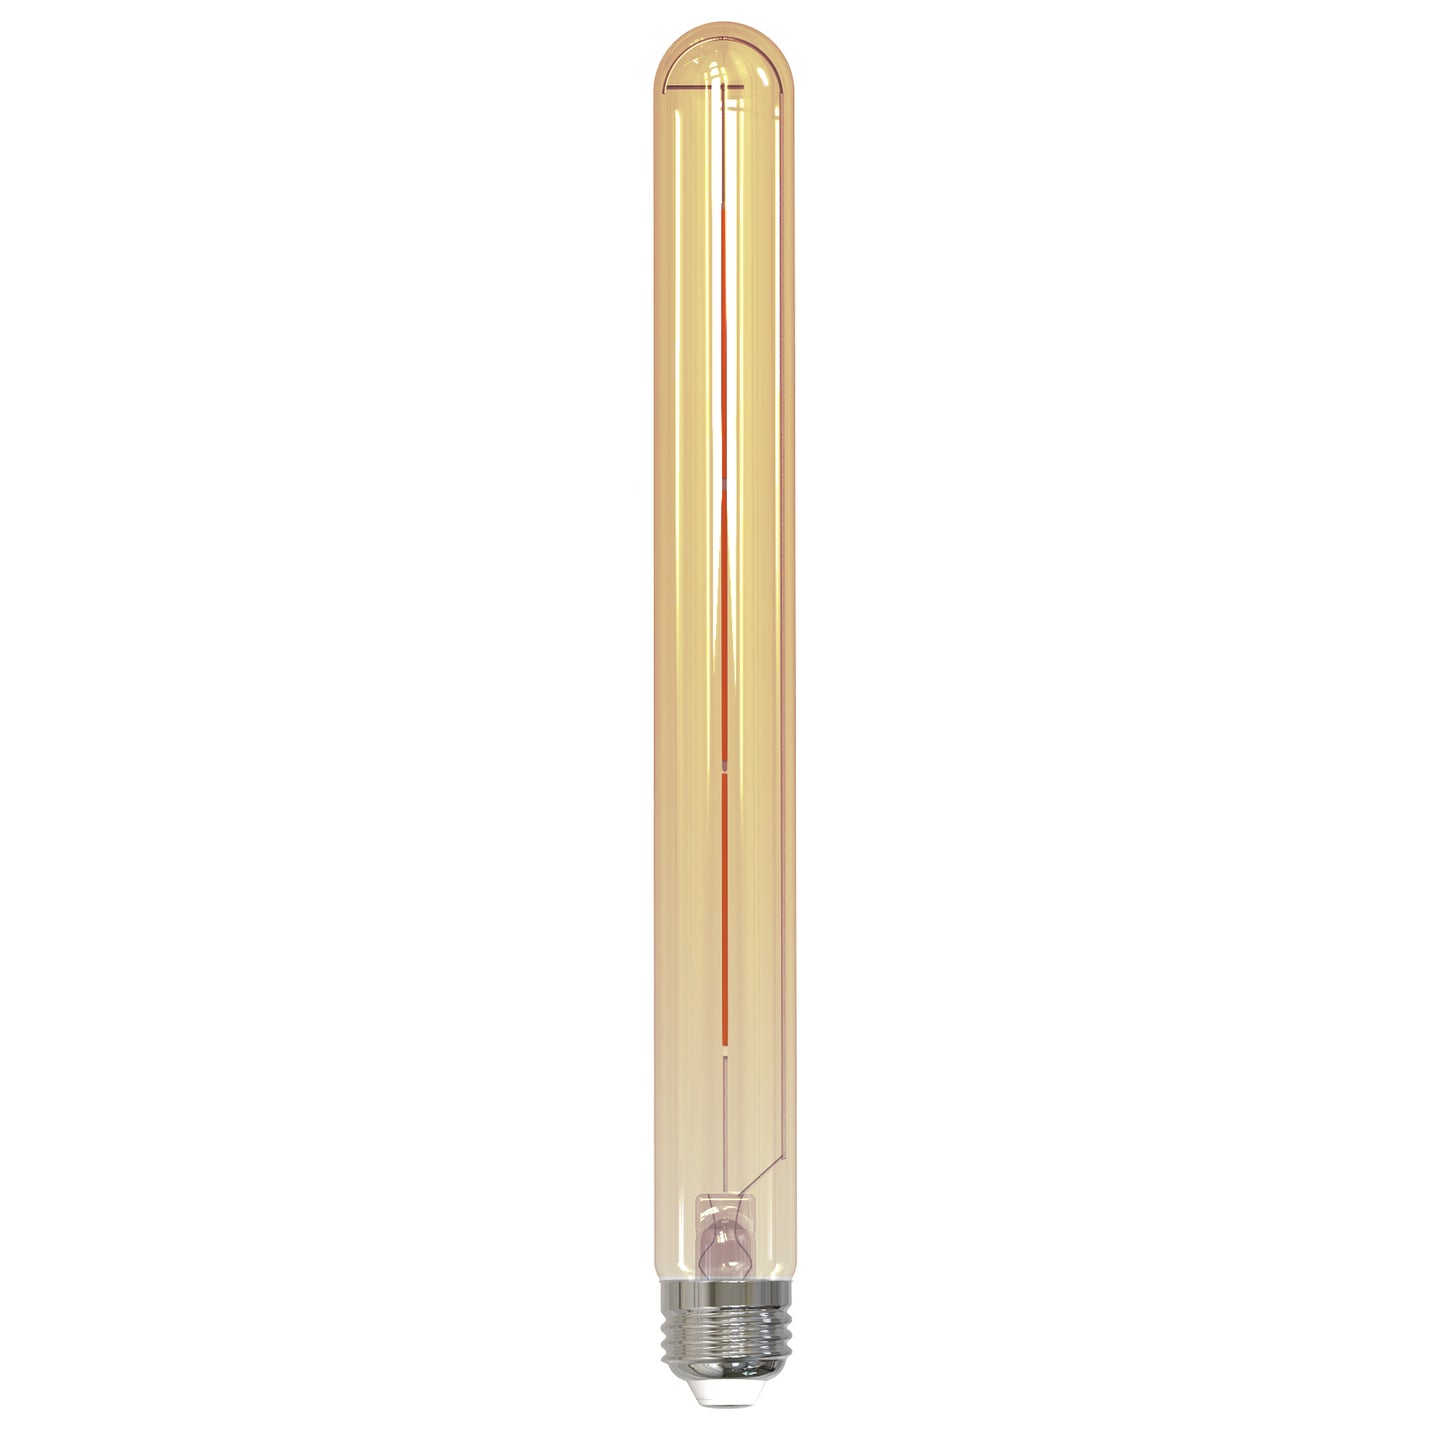 Bulbrite LED Filament 5 Watt Dimmable 11 Inch T9 Light Bulb with Antique Glass Finish and Medium (E26) Base - 2100K (Amber Light), 300 Lumens